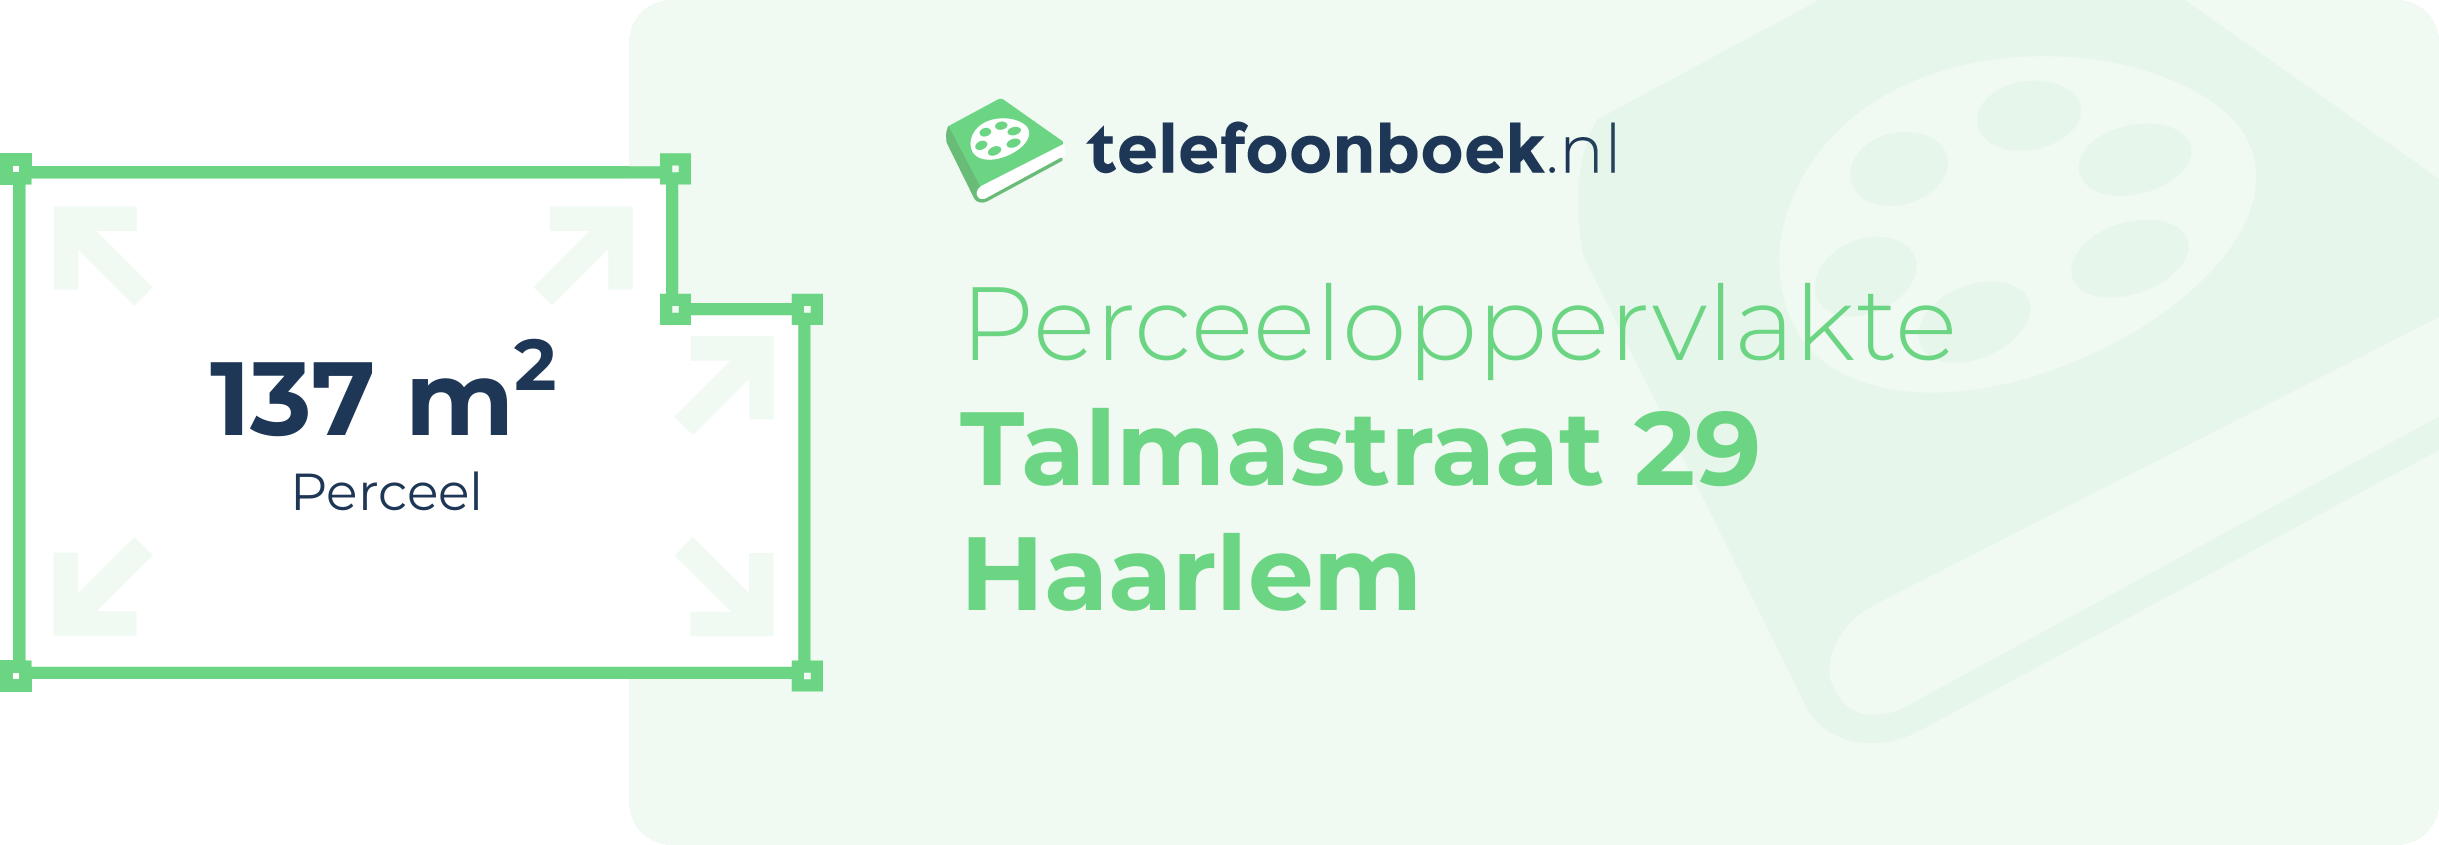 Perceeloppervlakte Talmastraat 29 Haarlem